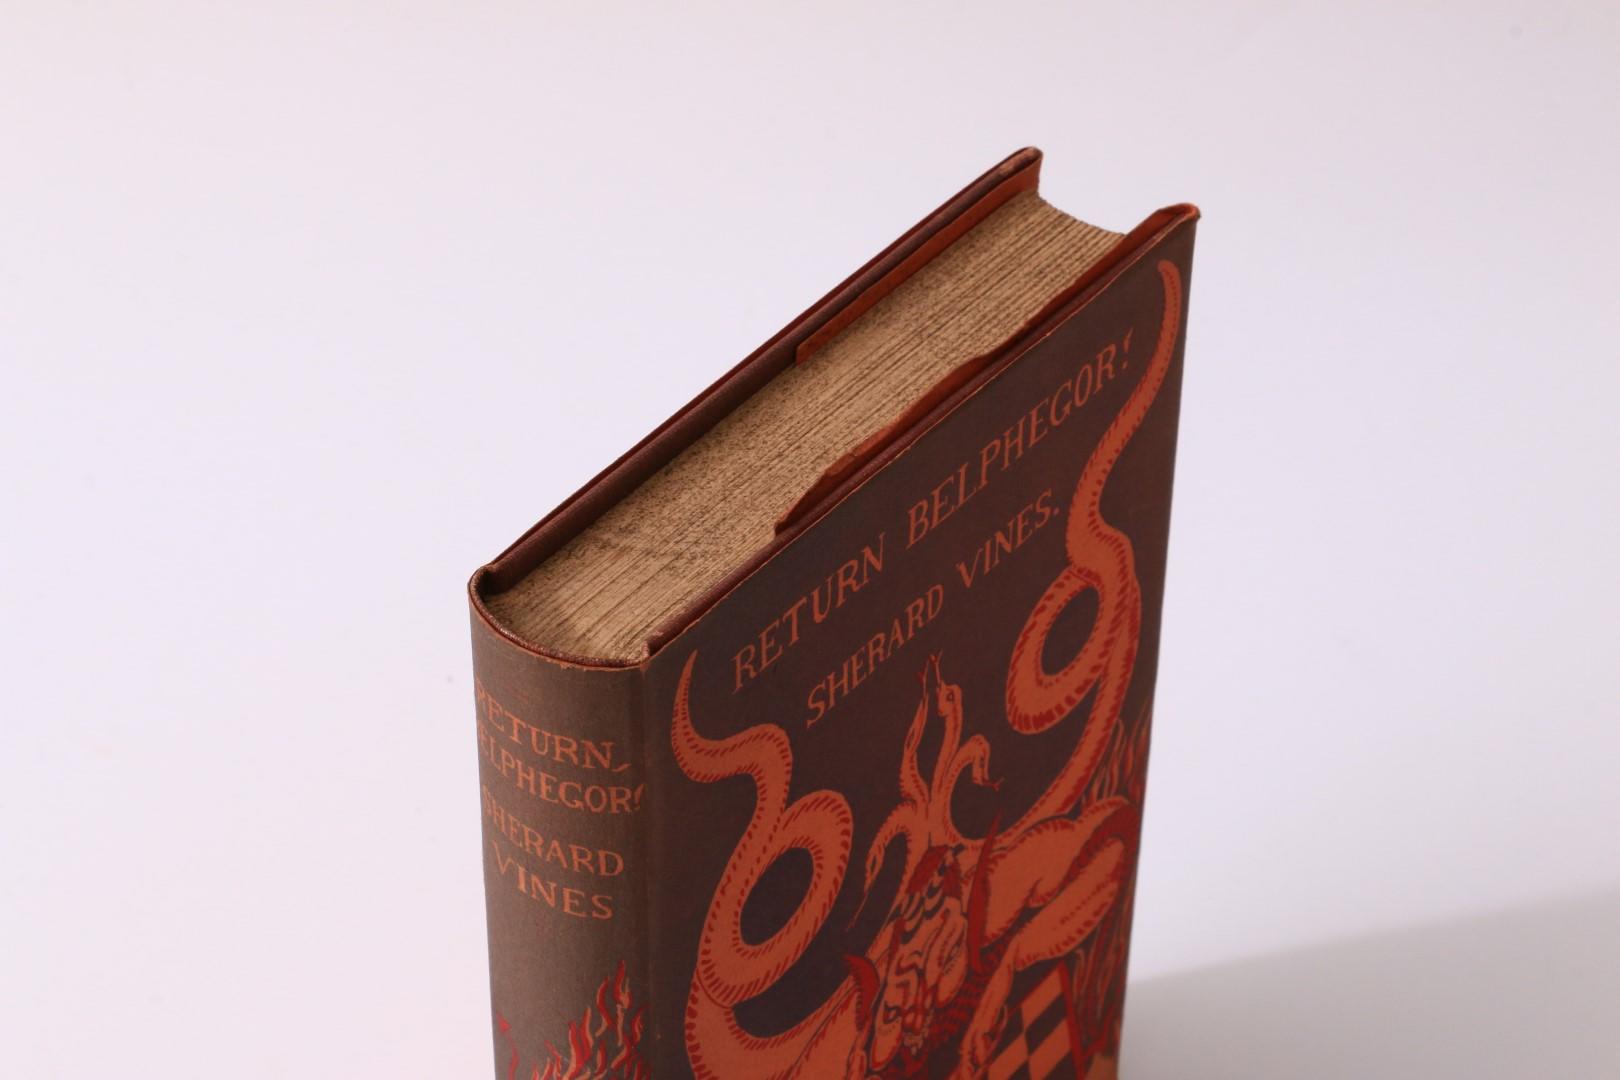 Sherard Vines - Return Belphegor! - Wishart, 1932, First Edition.